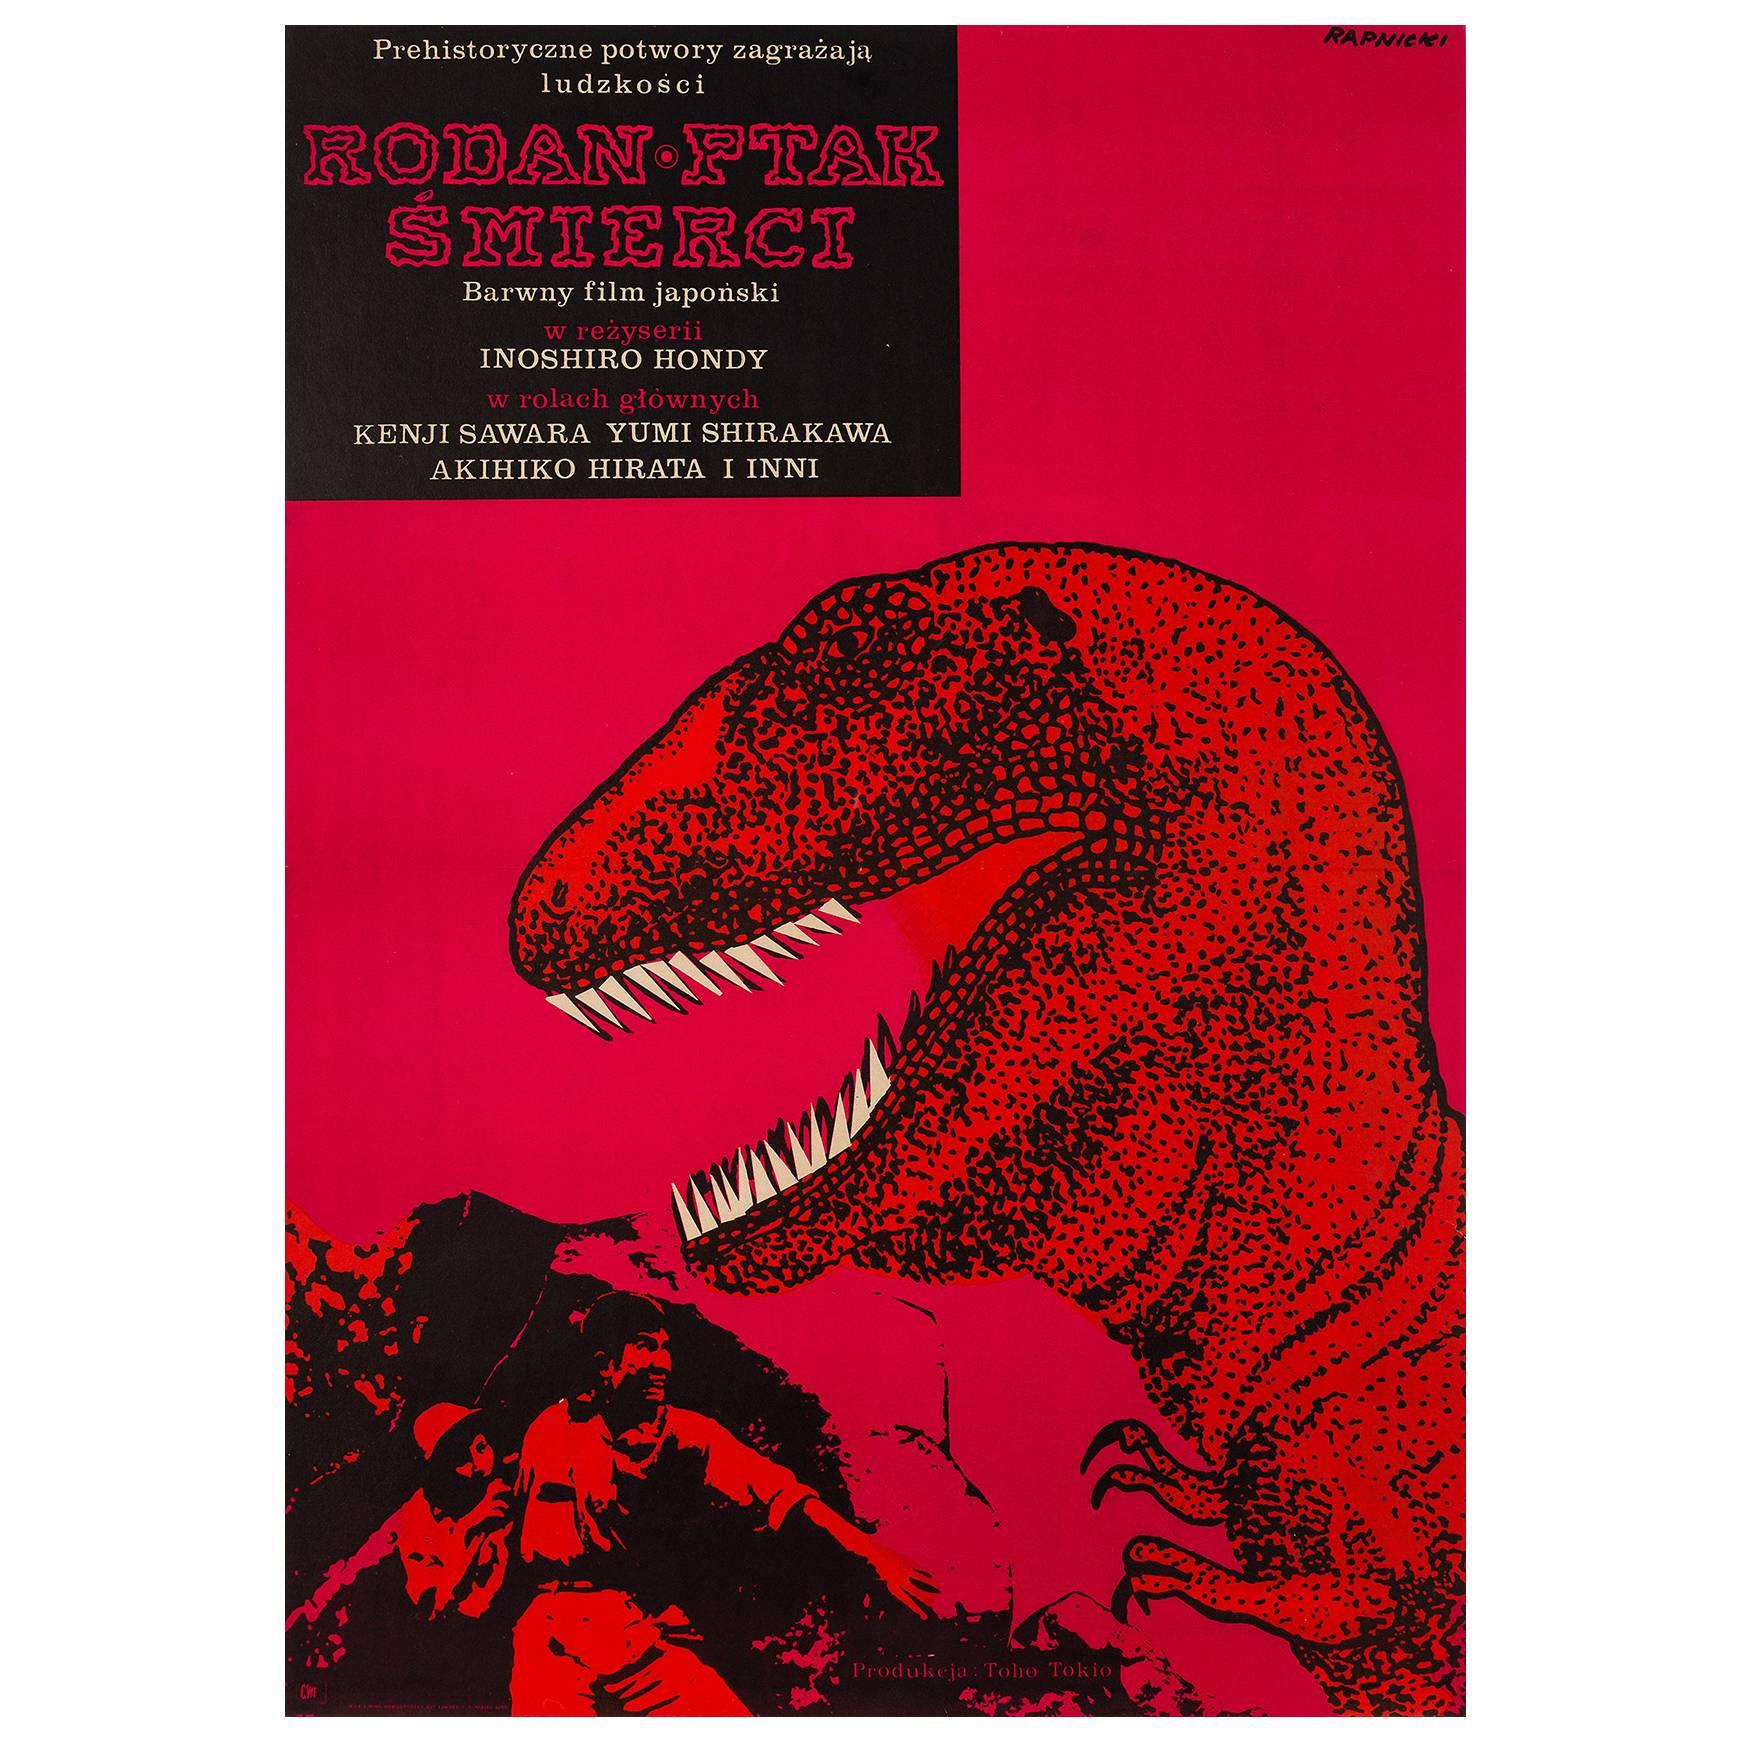 Rodan! The Flying Monster! Original Polish Film Poster, Janusz Rapnicki, 1967